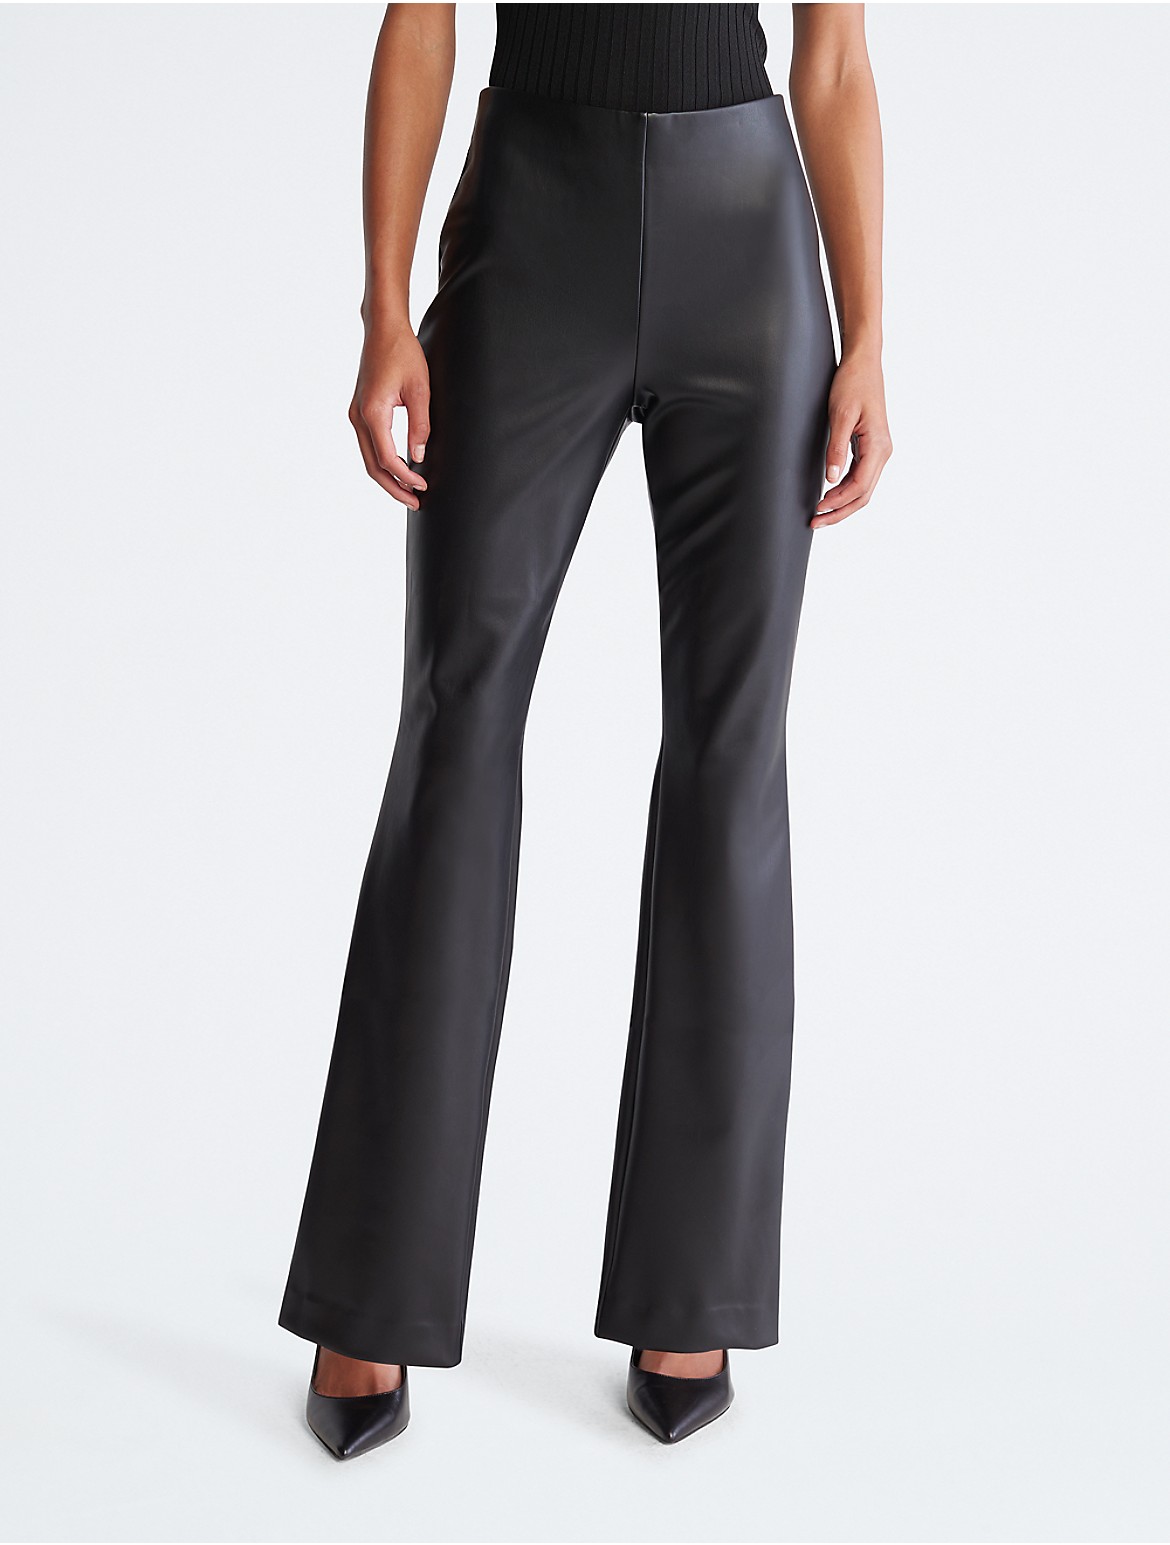 Calvin Klein Women's Faux Leather Flared Pants - Black - XS